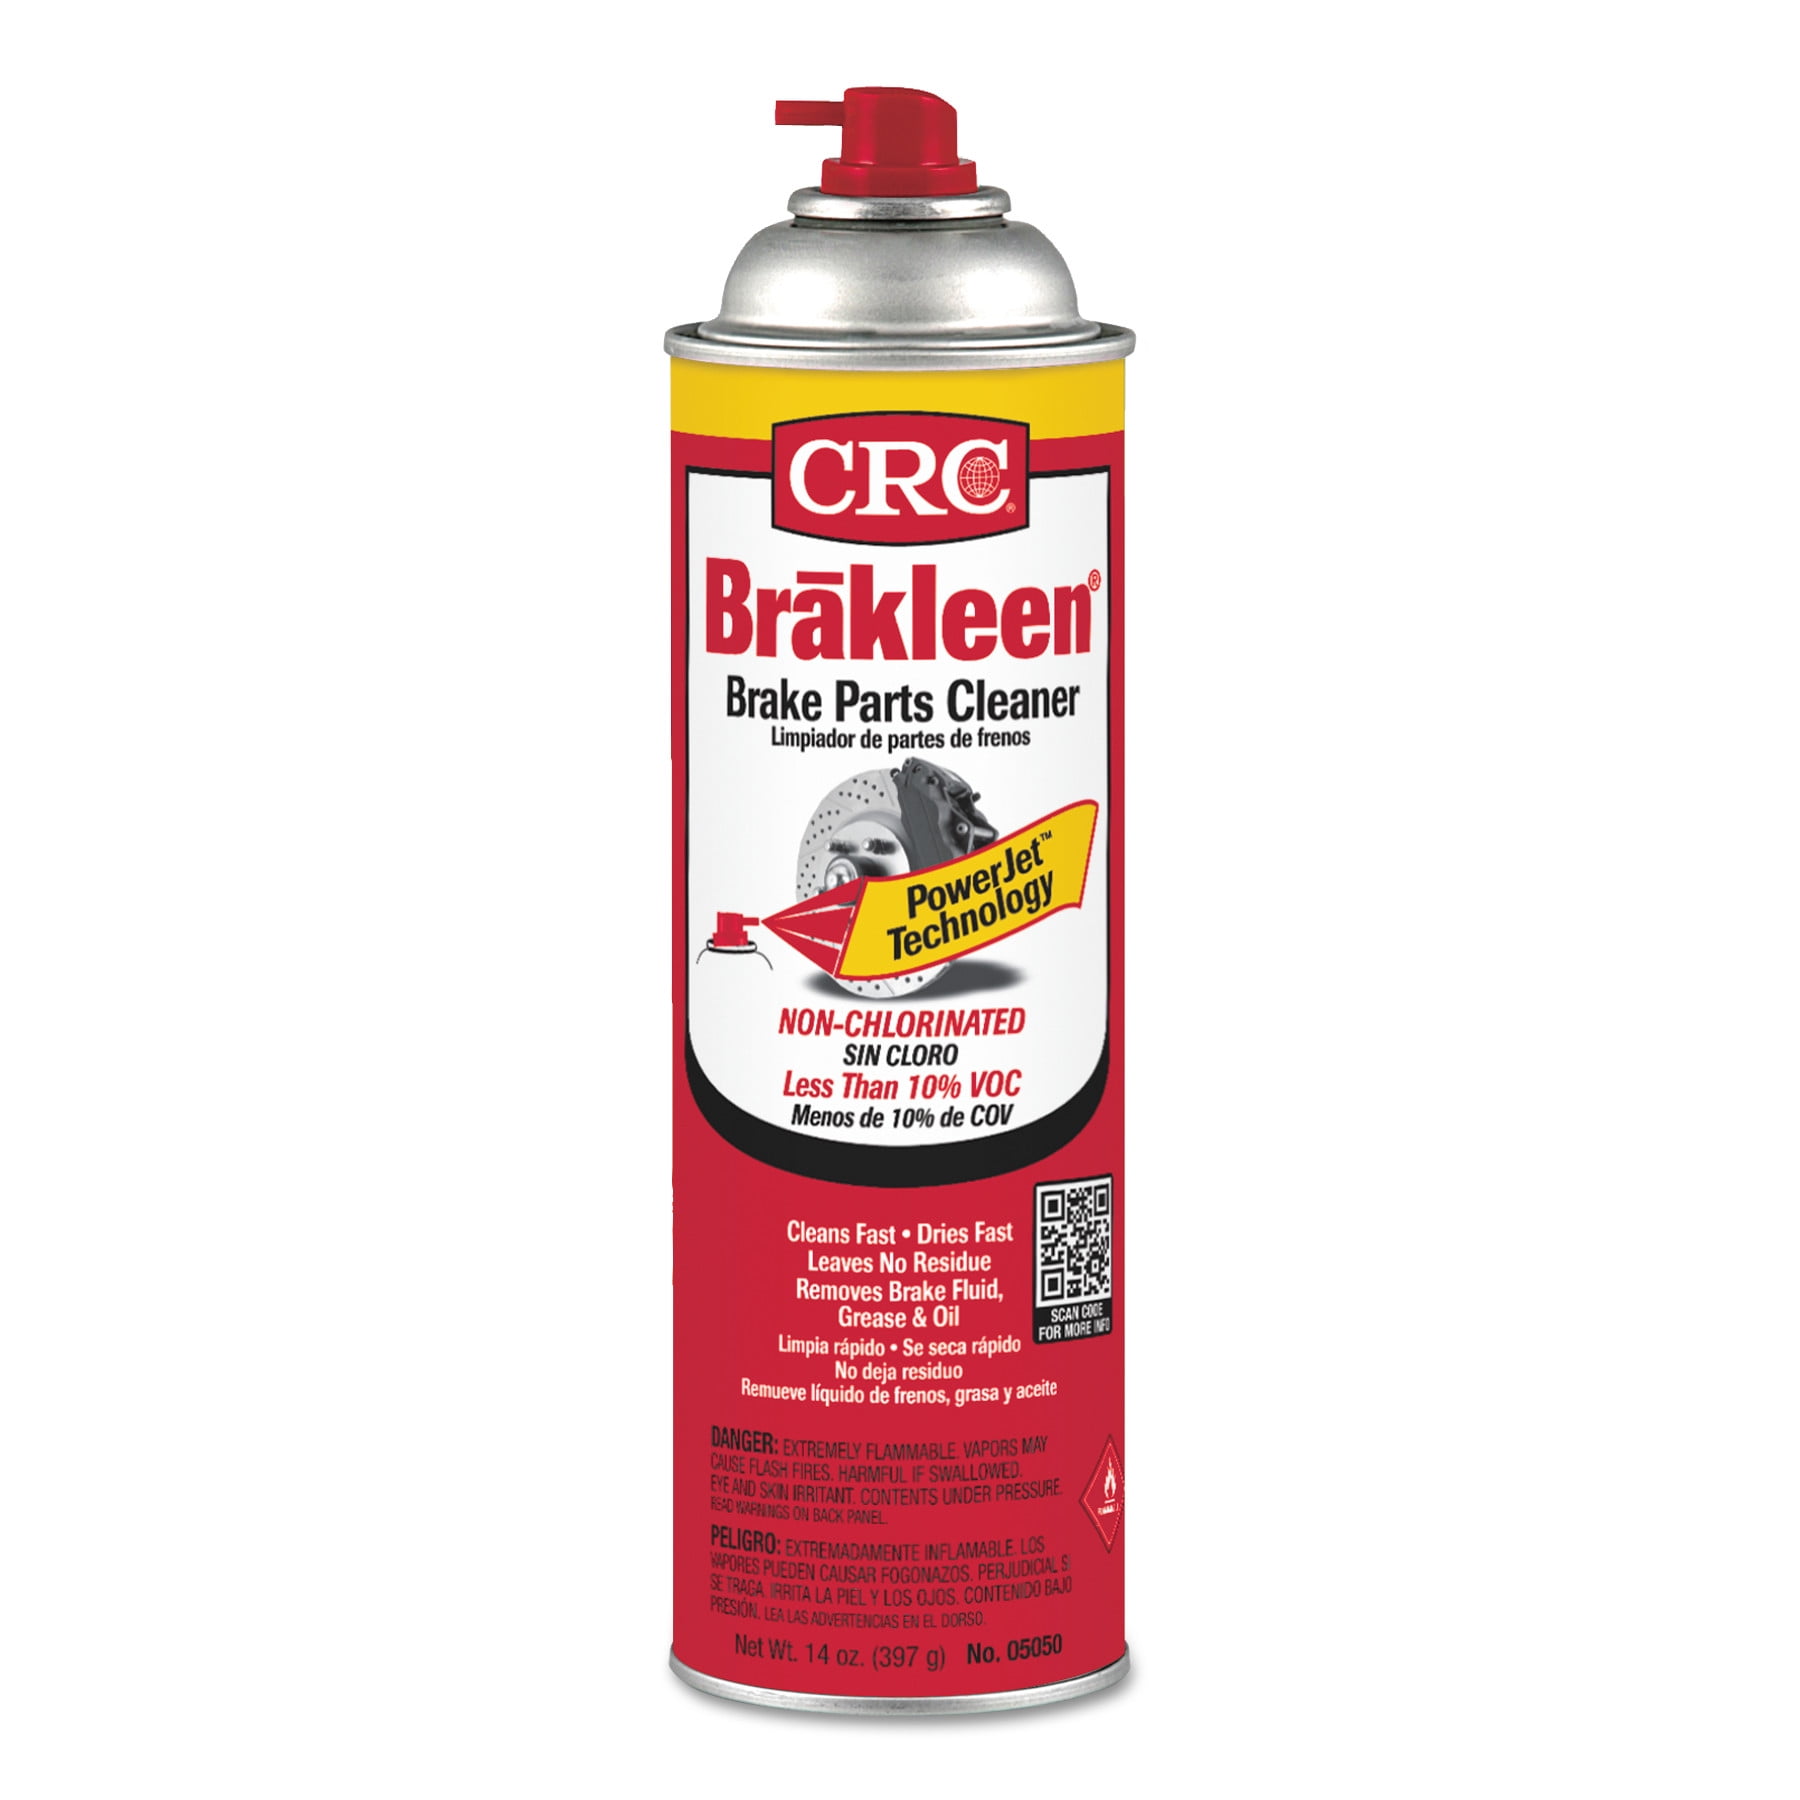 E-COLL – DAS ORIGINAL » Brake cleaner spray can 500 ml E-COLL